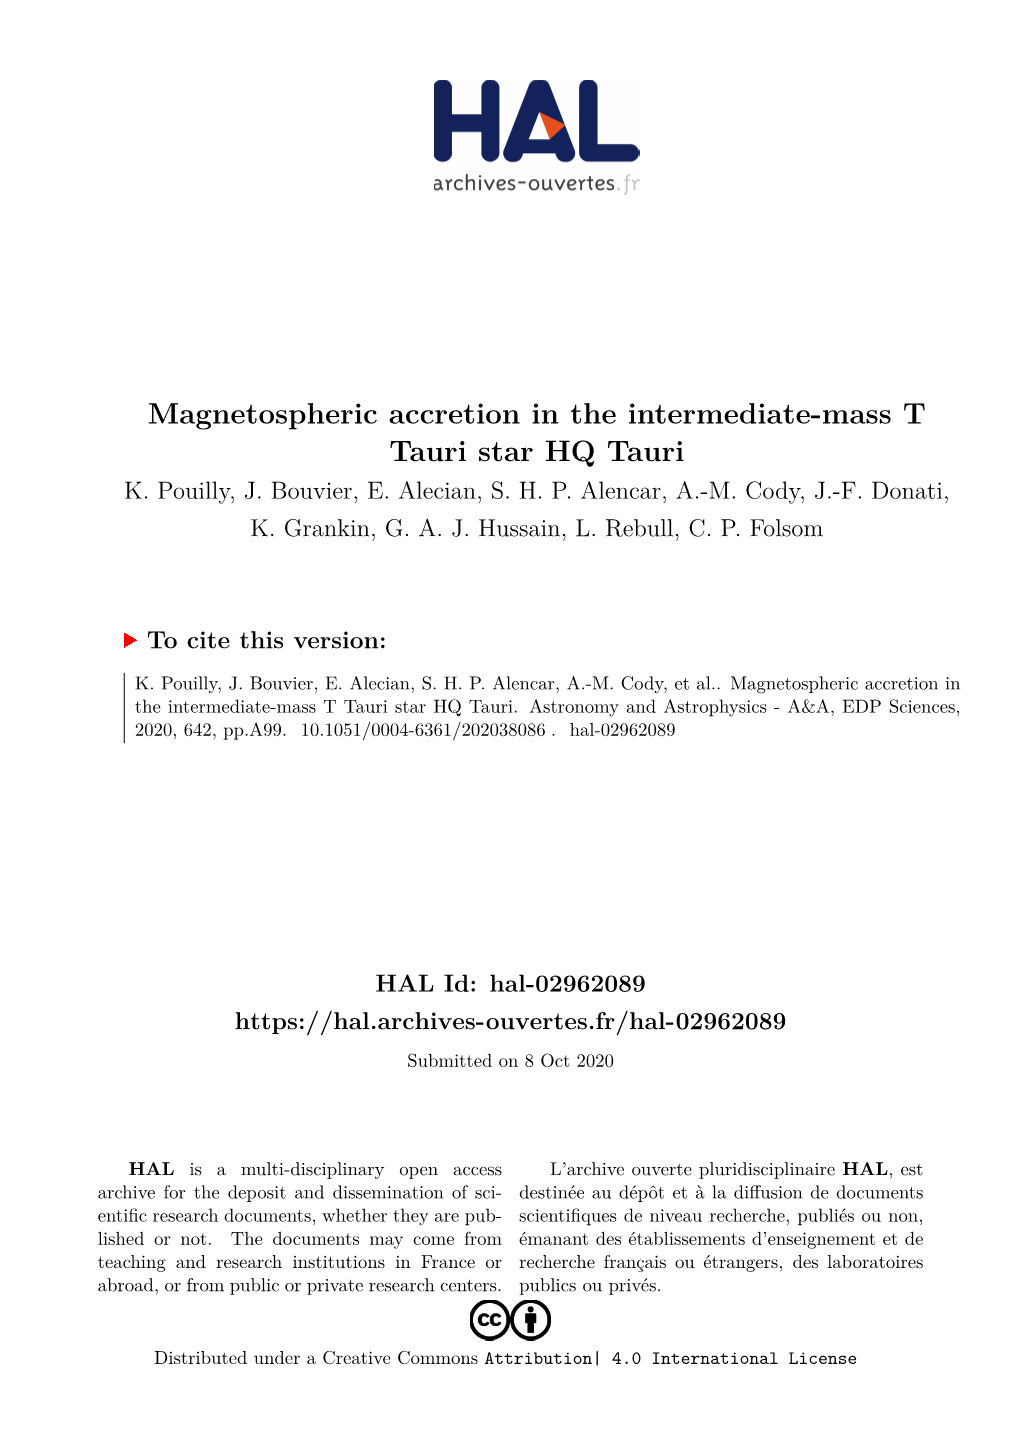 Magnetospheric Accretion in the Intermediate-Mass T Tauri Star HQ Tauri K